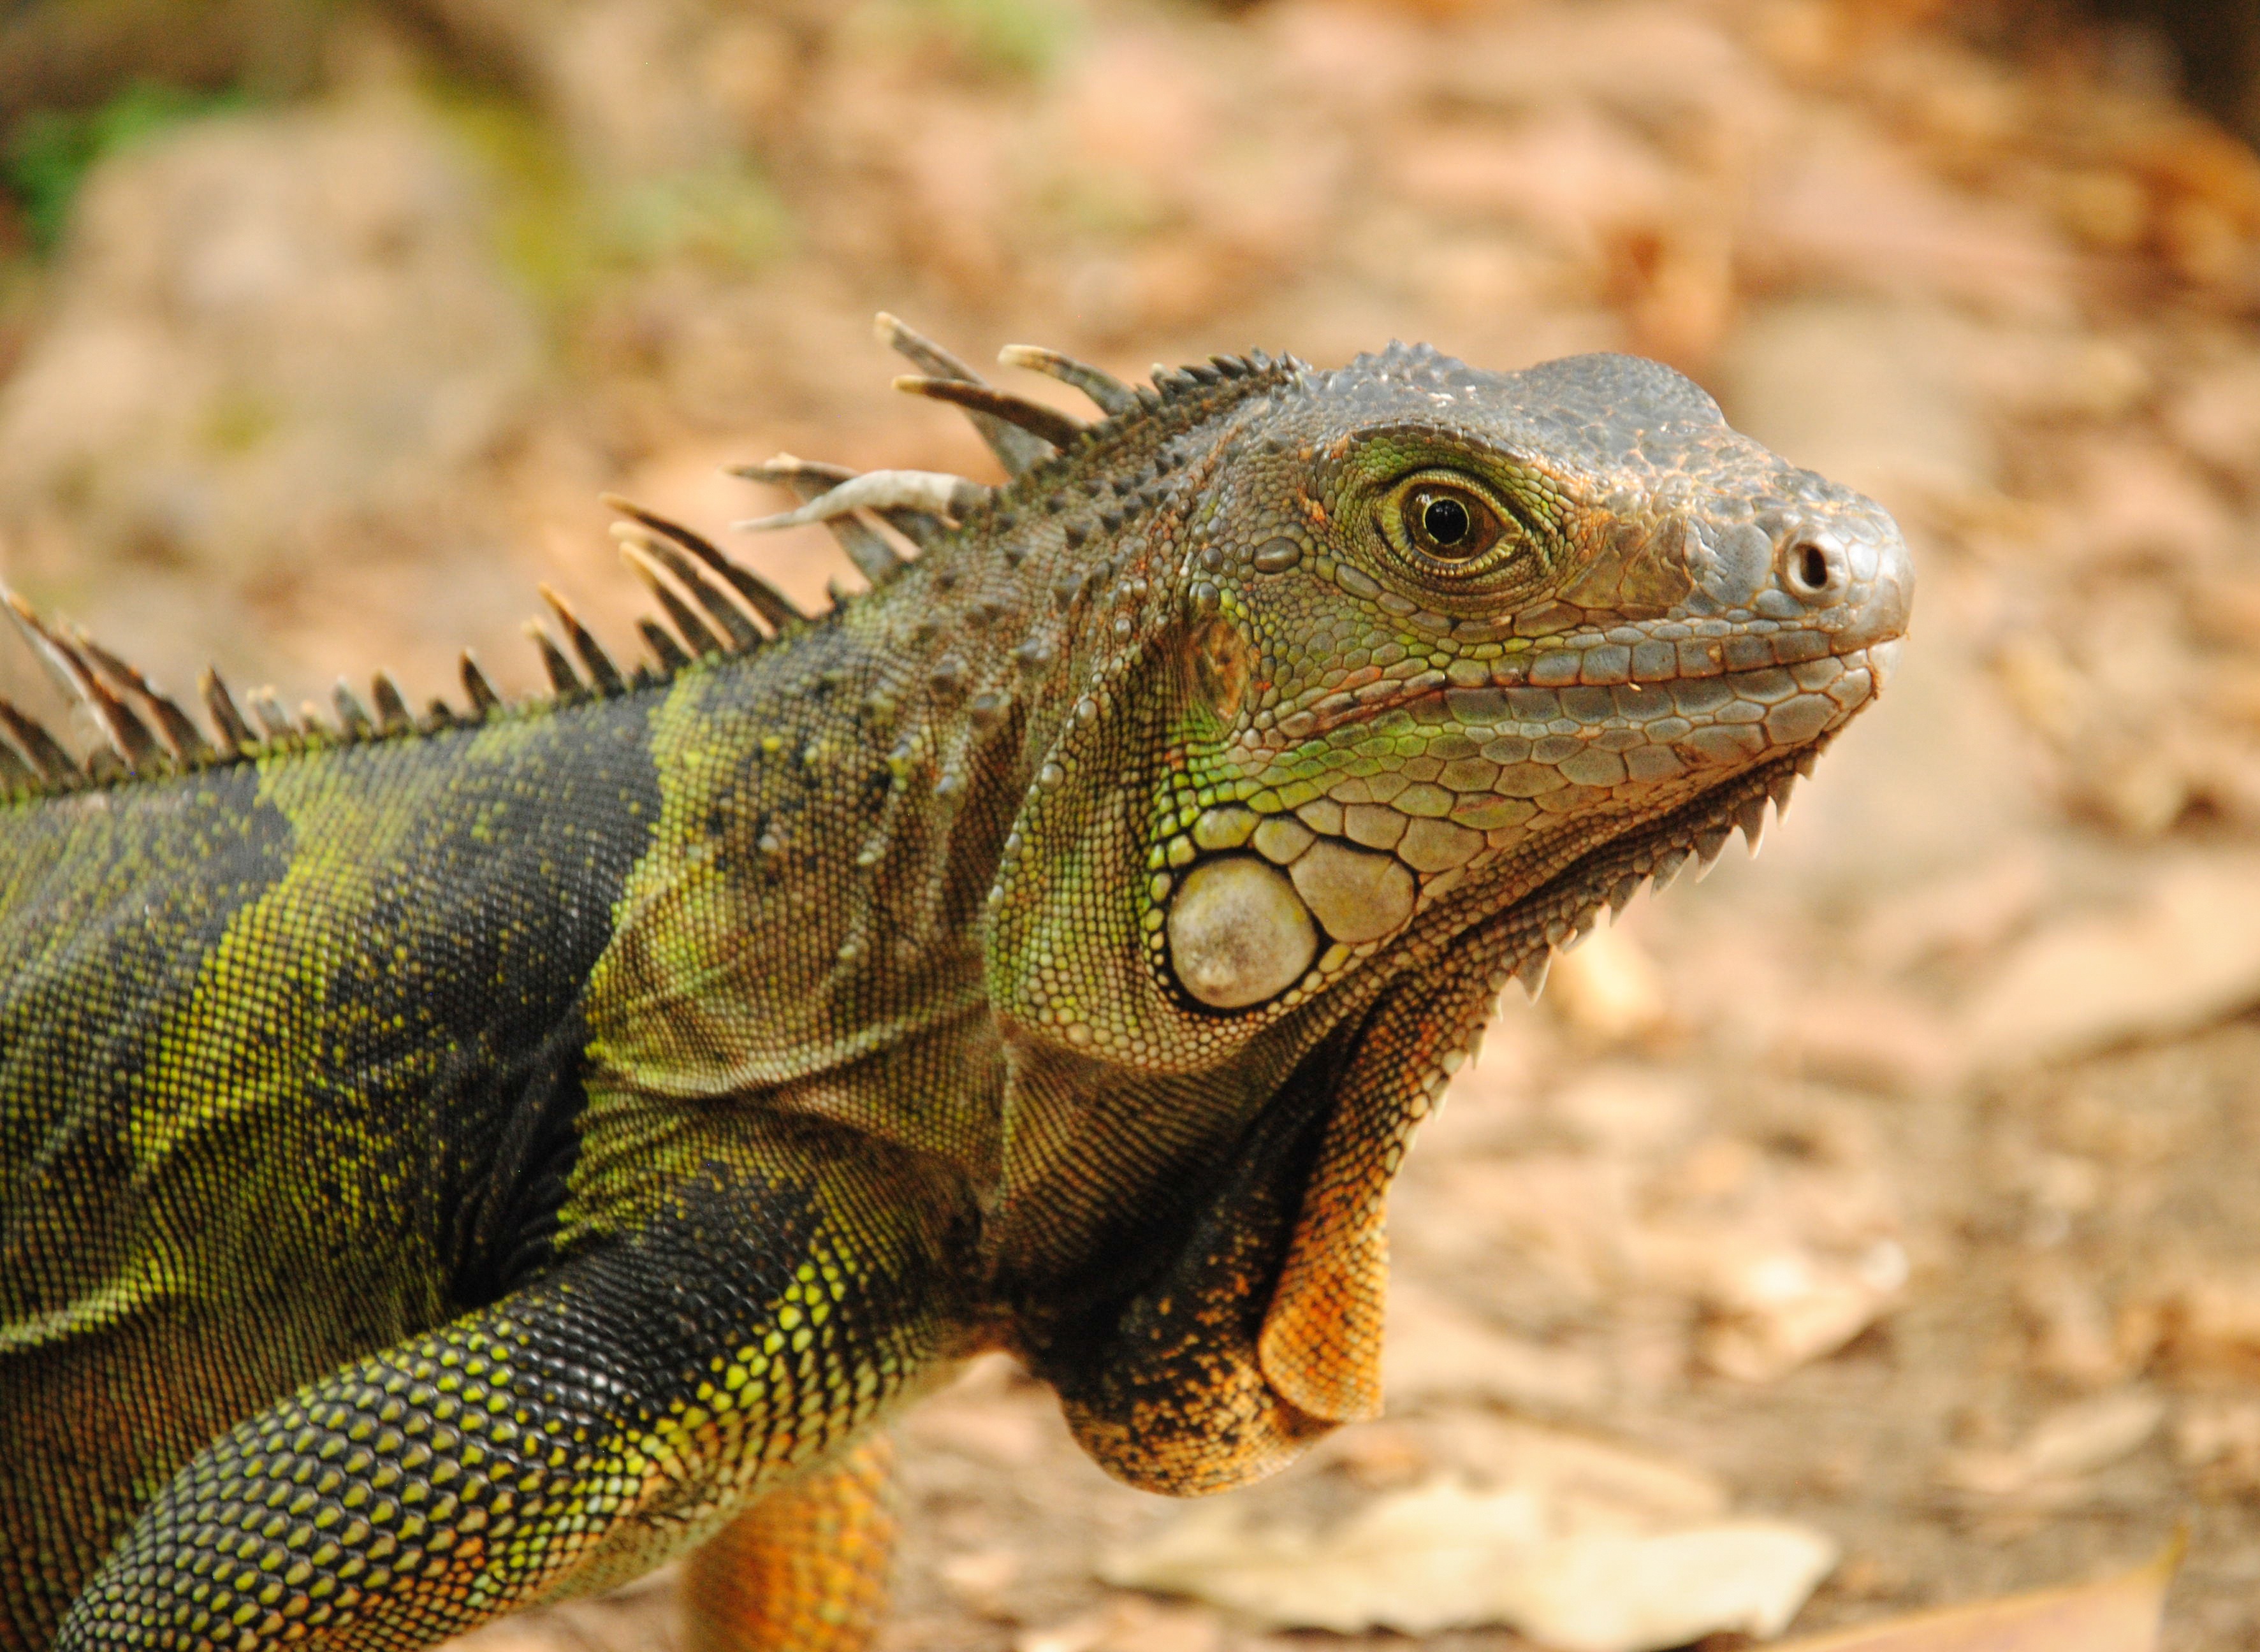 Descarga gratis la imagen Lagarto, Iguana, Animales, Reptil, Lagartija en el escritorio de tu PC